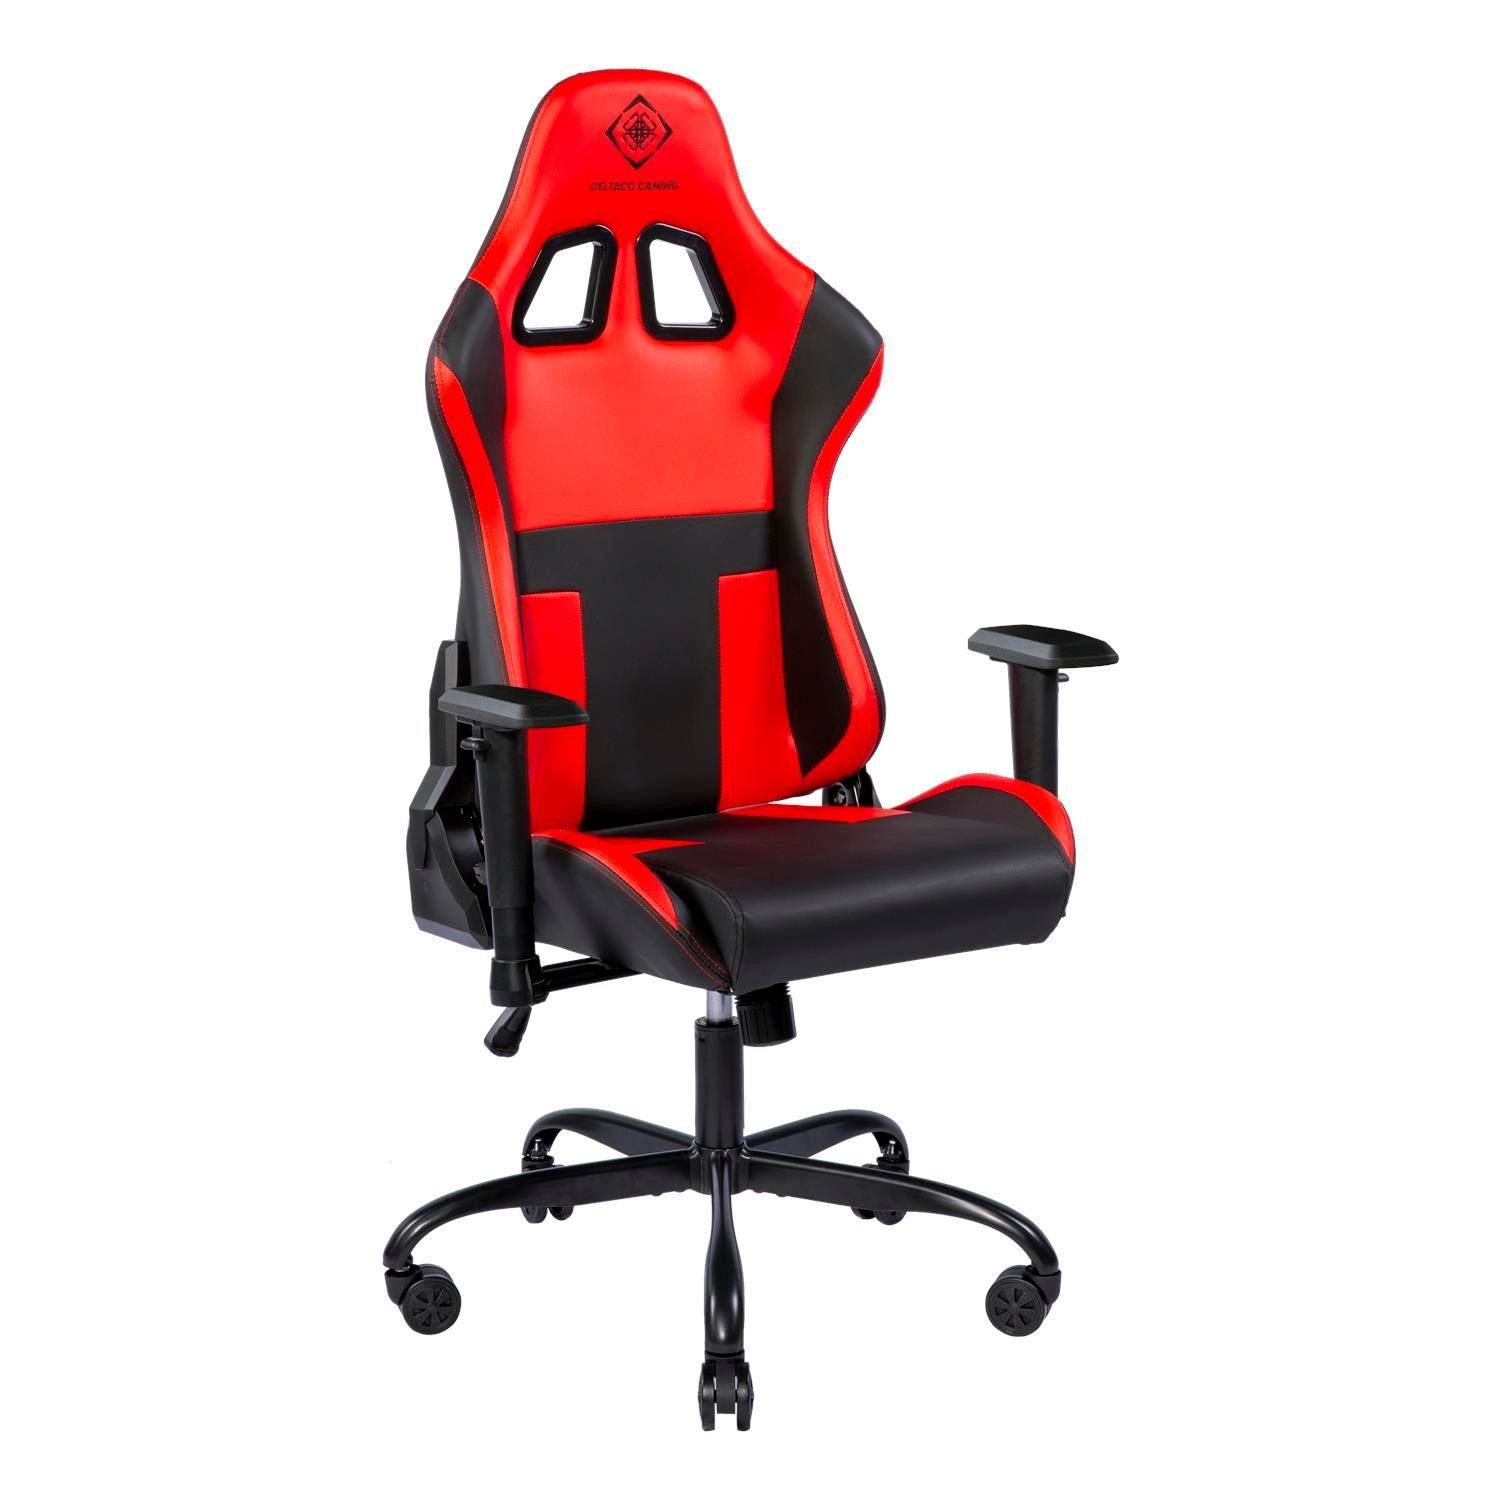 5 (kein Jahre Herstellergarantie Rückenlehne, DELTACO Gaming inkl. 110kg hohe Kissen schwarz/rot groß, Gamer Set), extra Stuhl Gaming-Stuhl Jumbo Stuhl